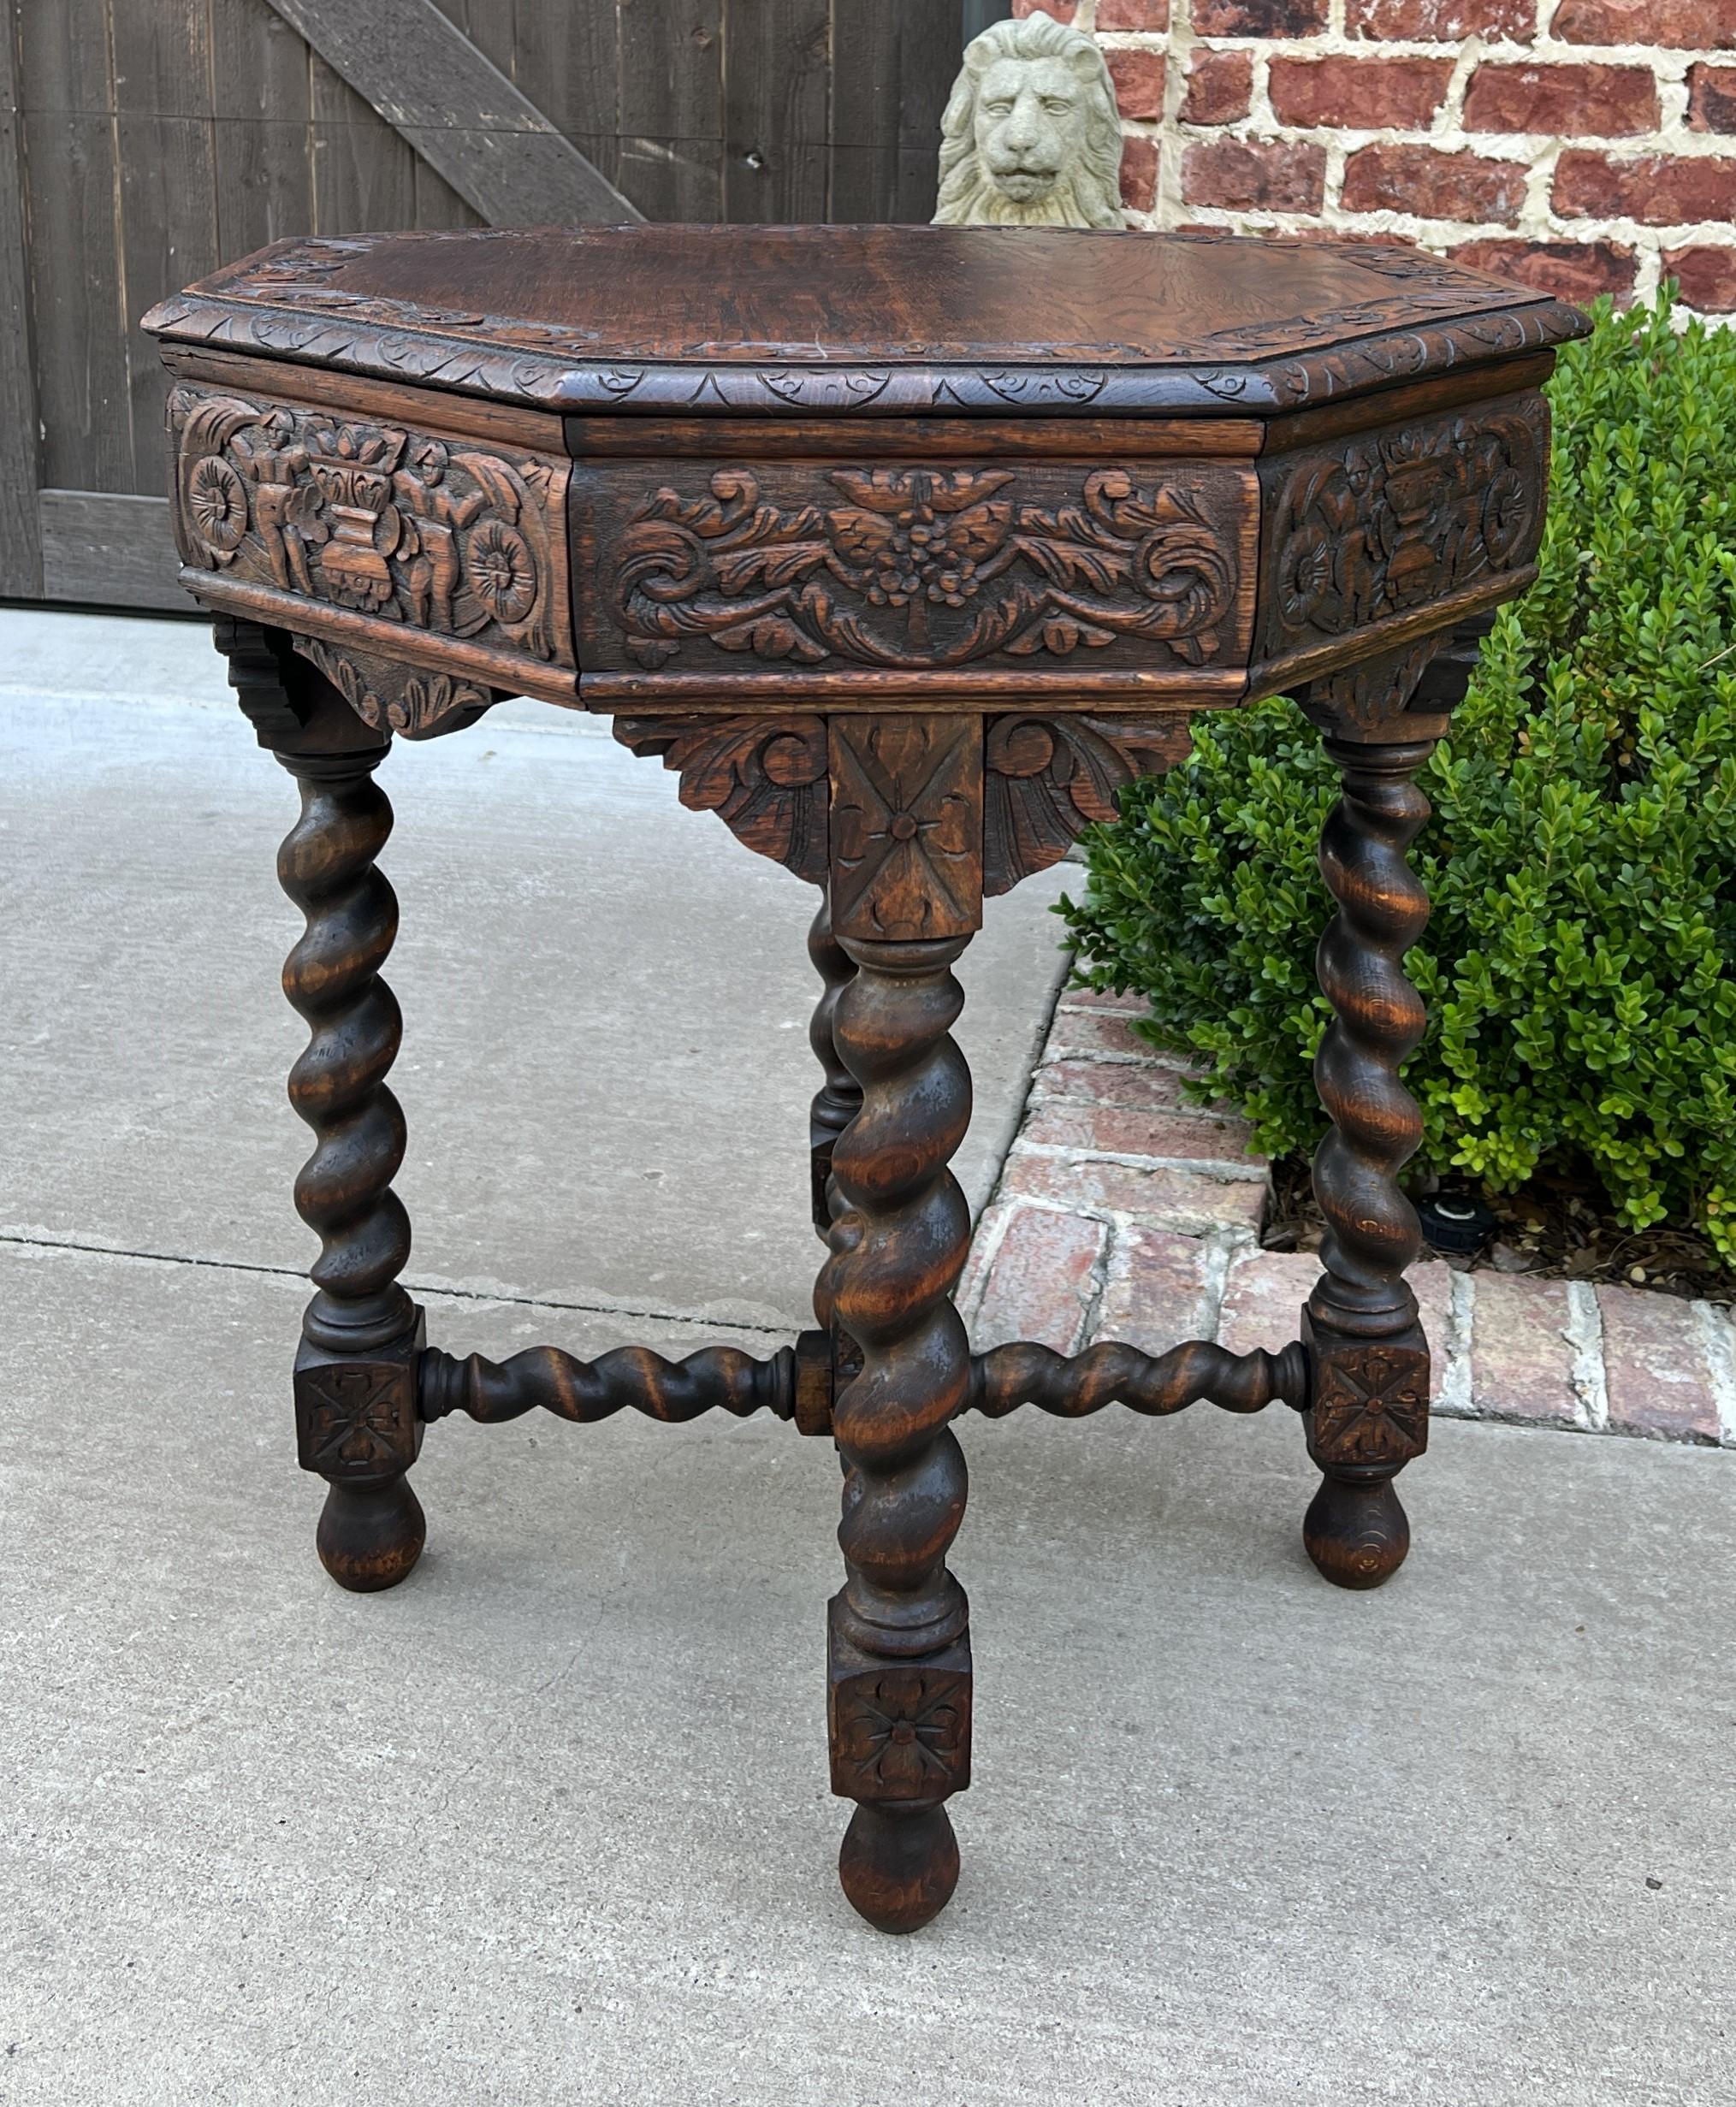 Antique French Table Barley Twist Octagonal Renaissance Revival Carved Oak 19thc For Sale 3